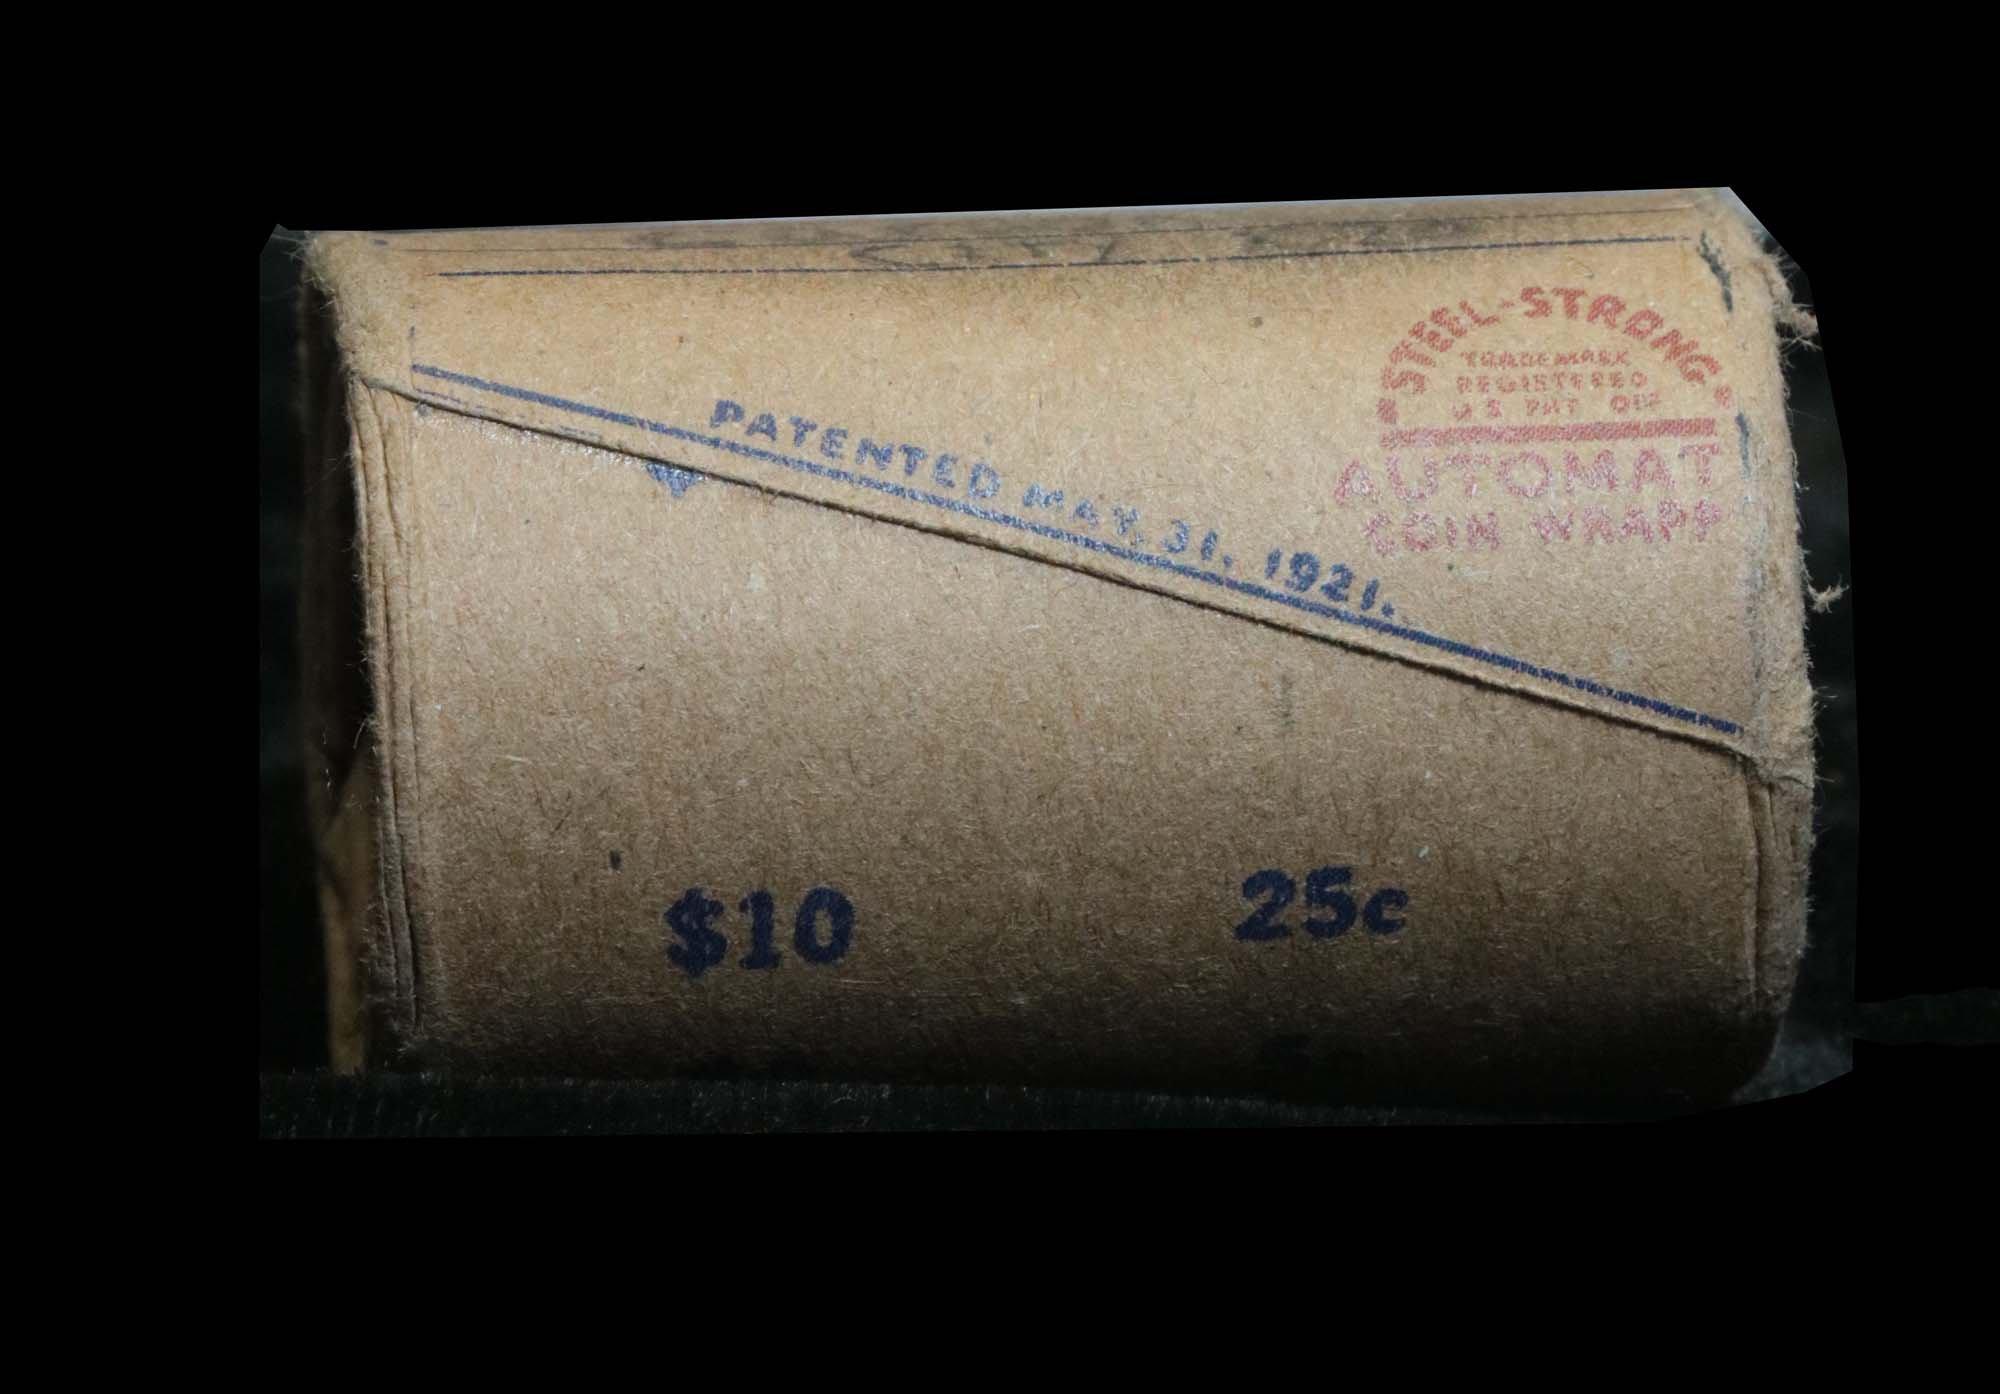 ***Auction Highlight*** Morgan dollar roll ends 1878 & 'cc', better than avg circ Morgan $1 (fc)